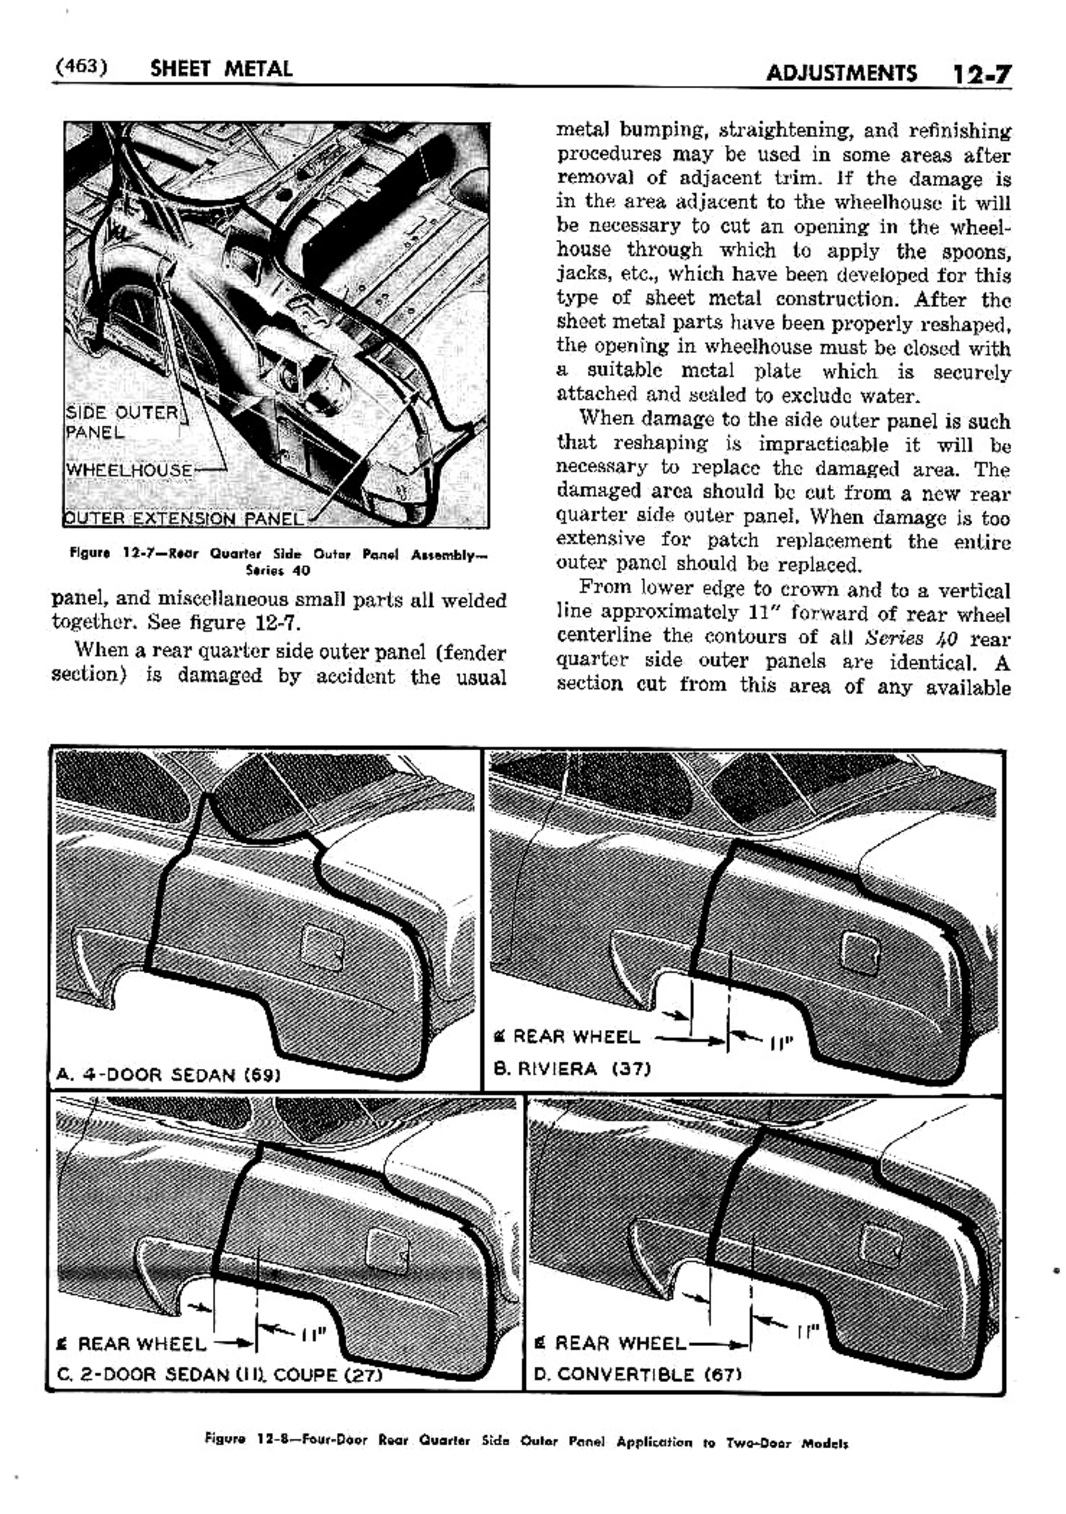 n_13 1952 Buick Shop Manual - Sheet Metal-007-007.jpg